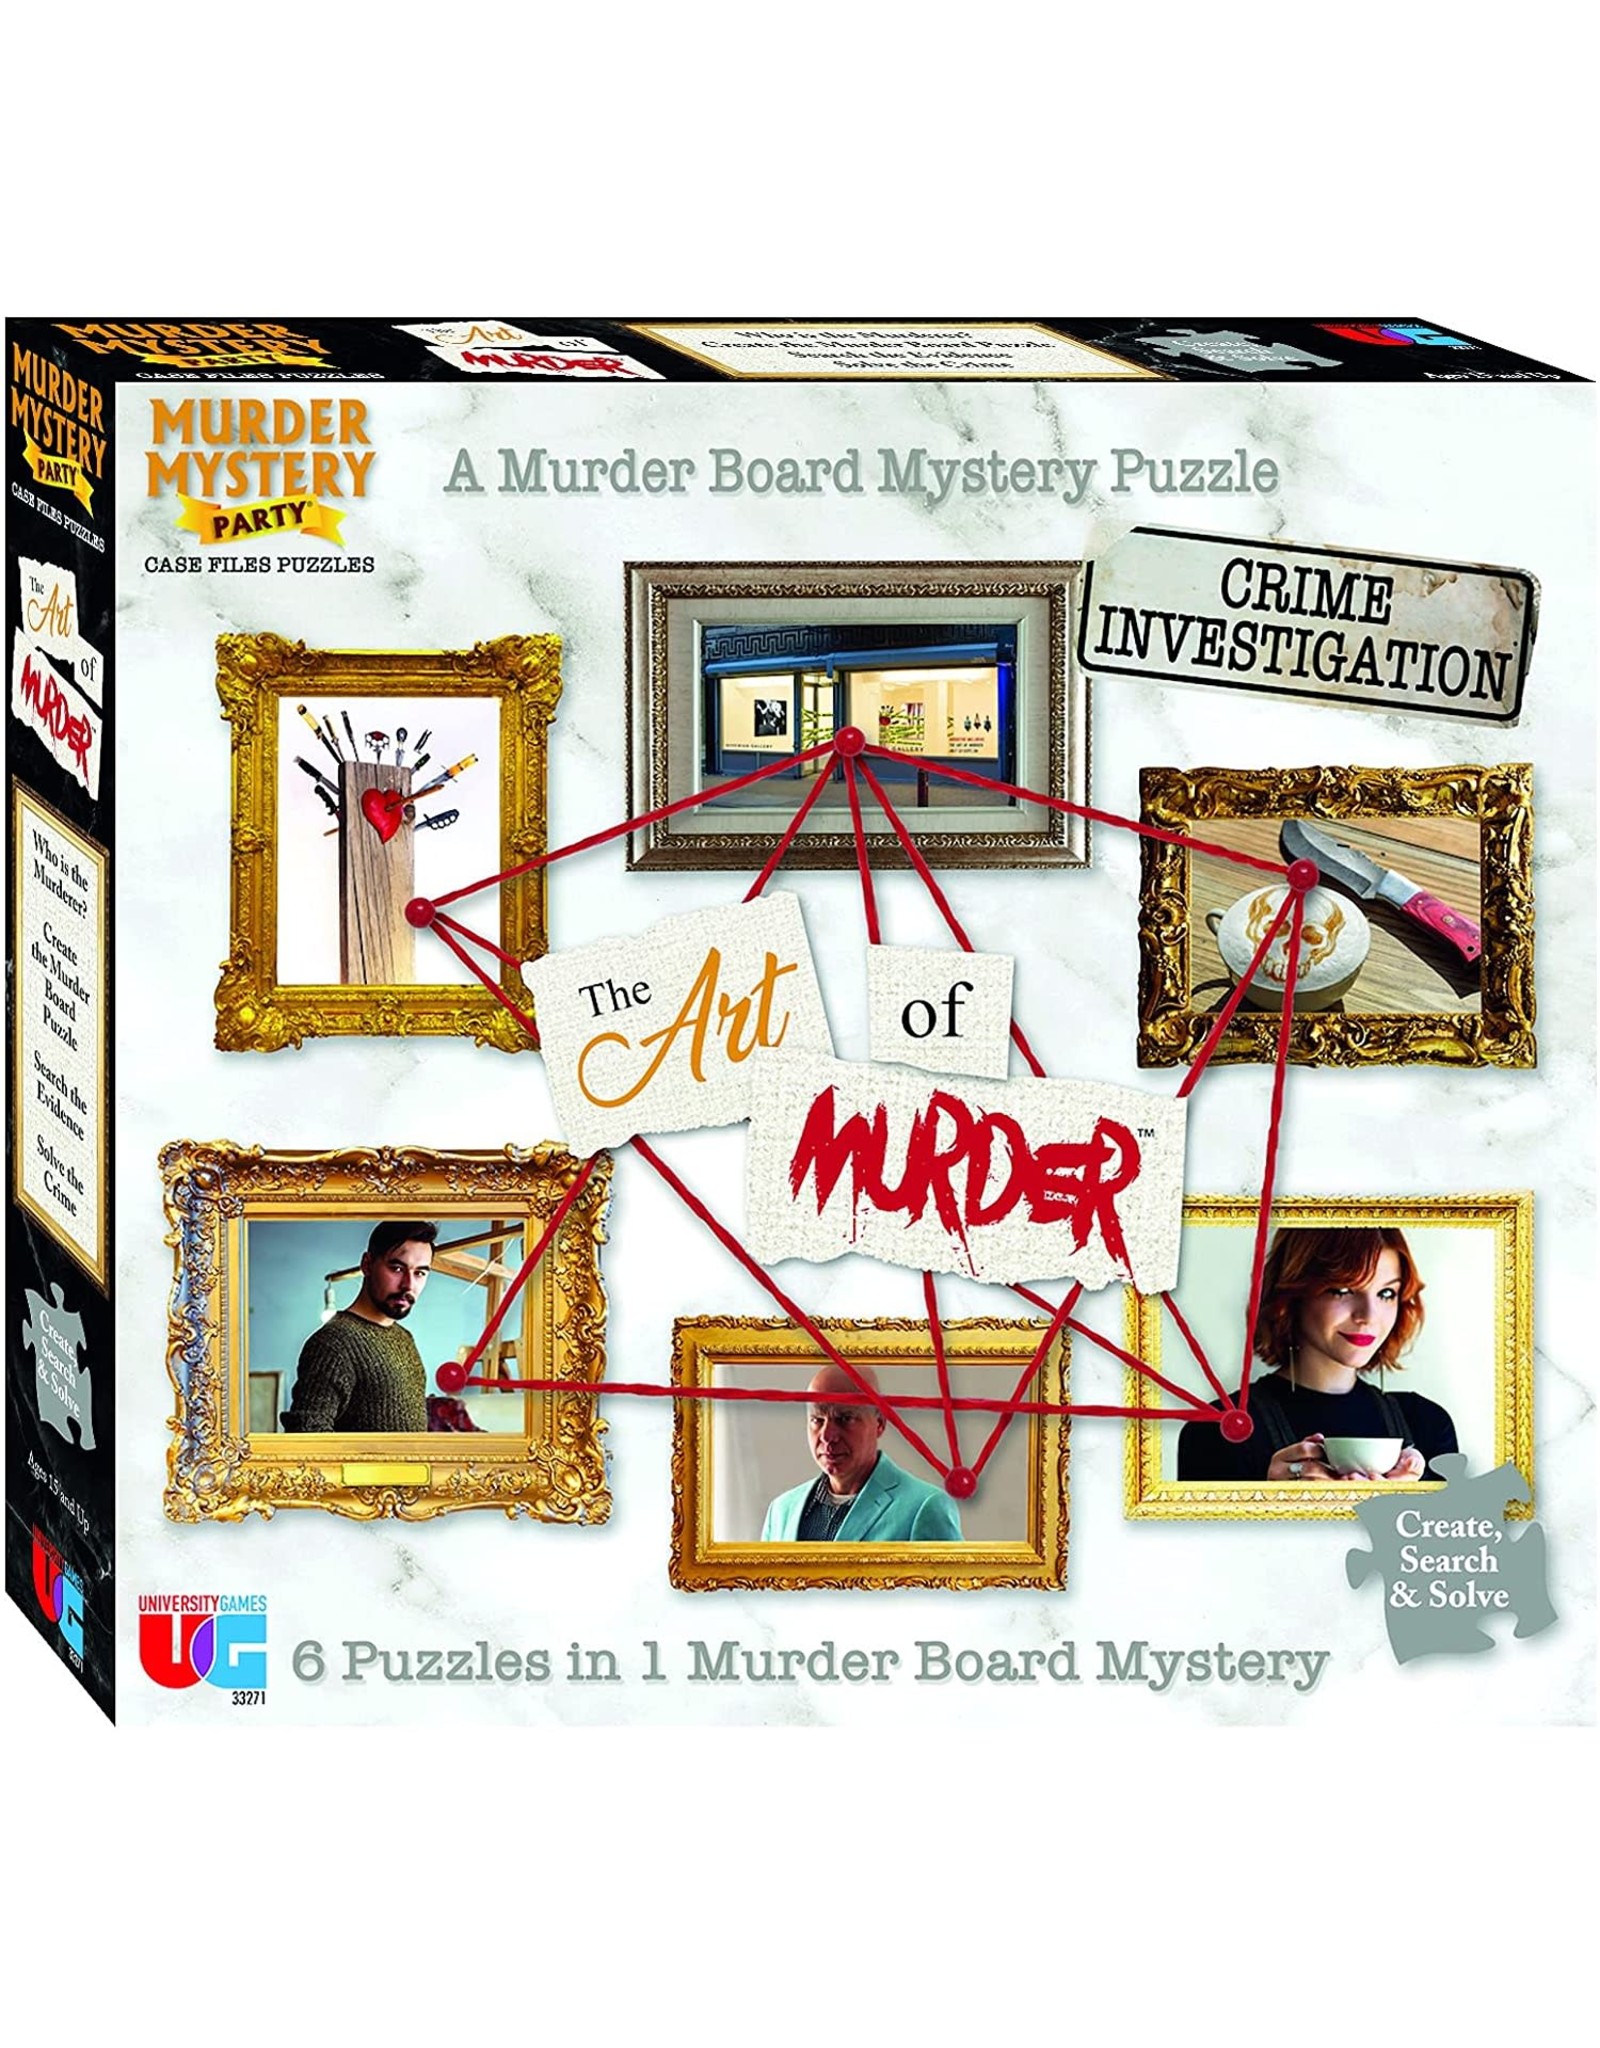 Case File Puzzle - Art of Murder